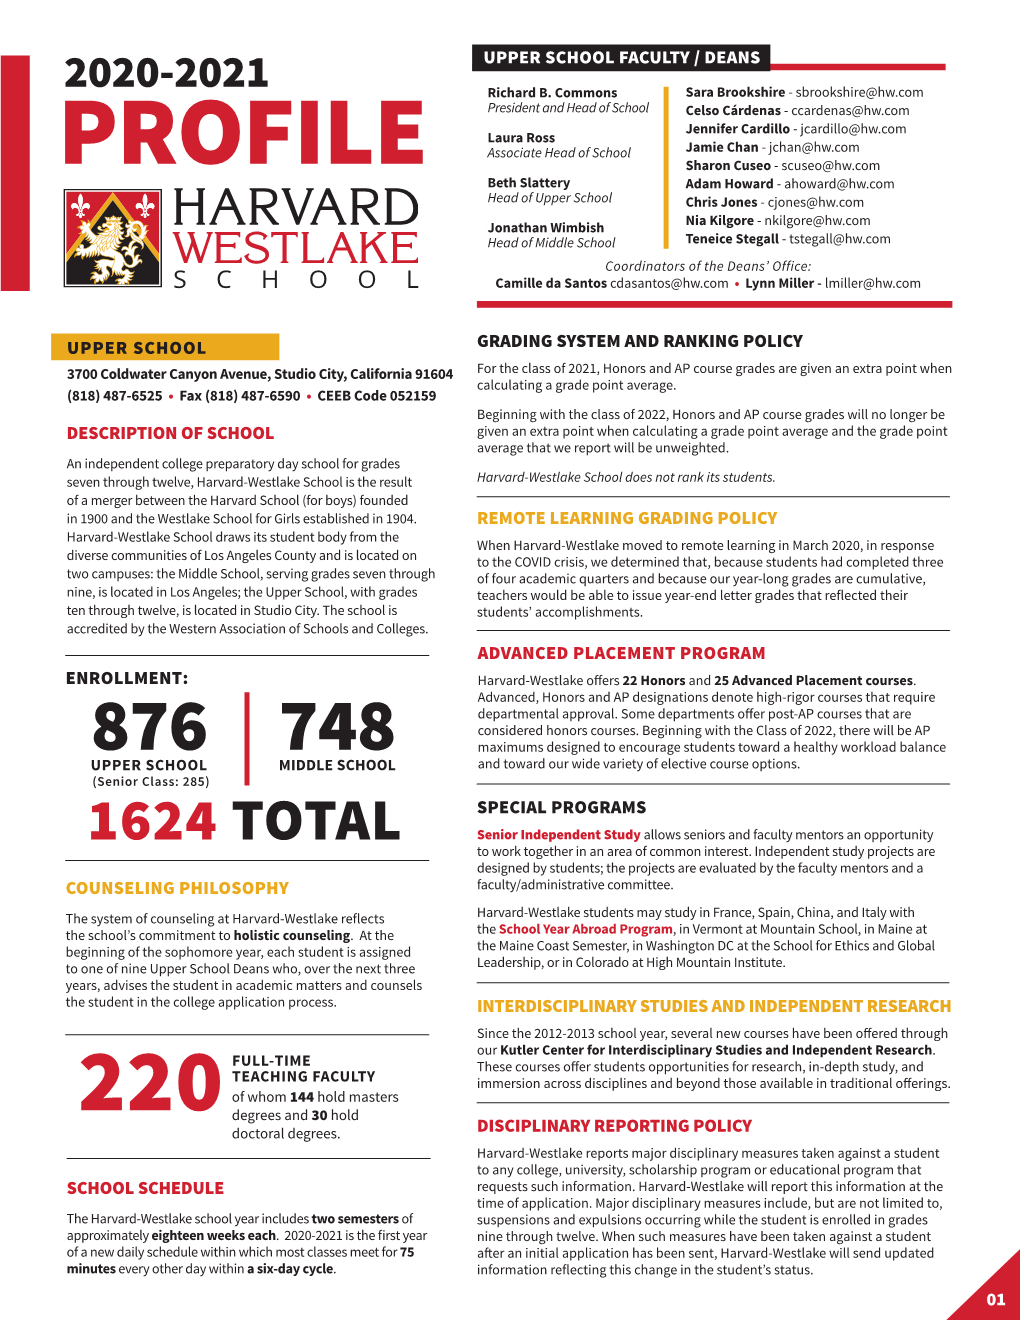 Harvard-Westlake School Profile 2020-21